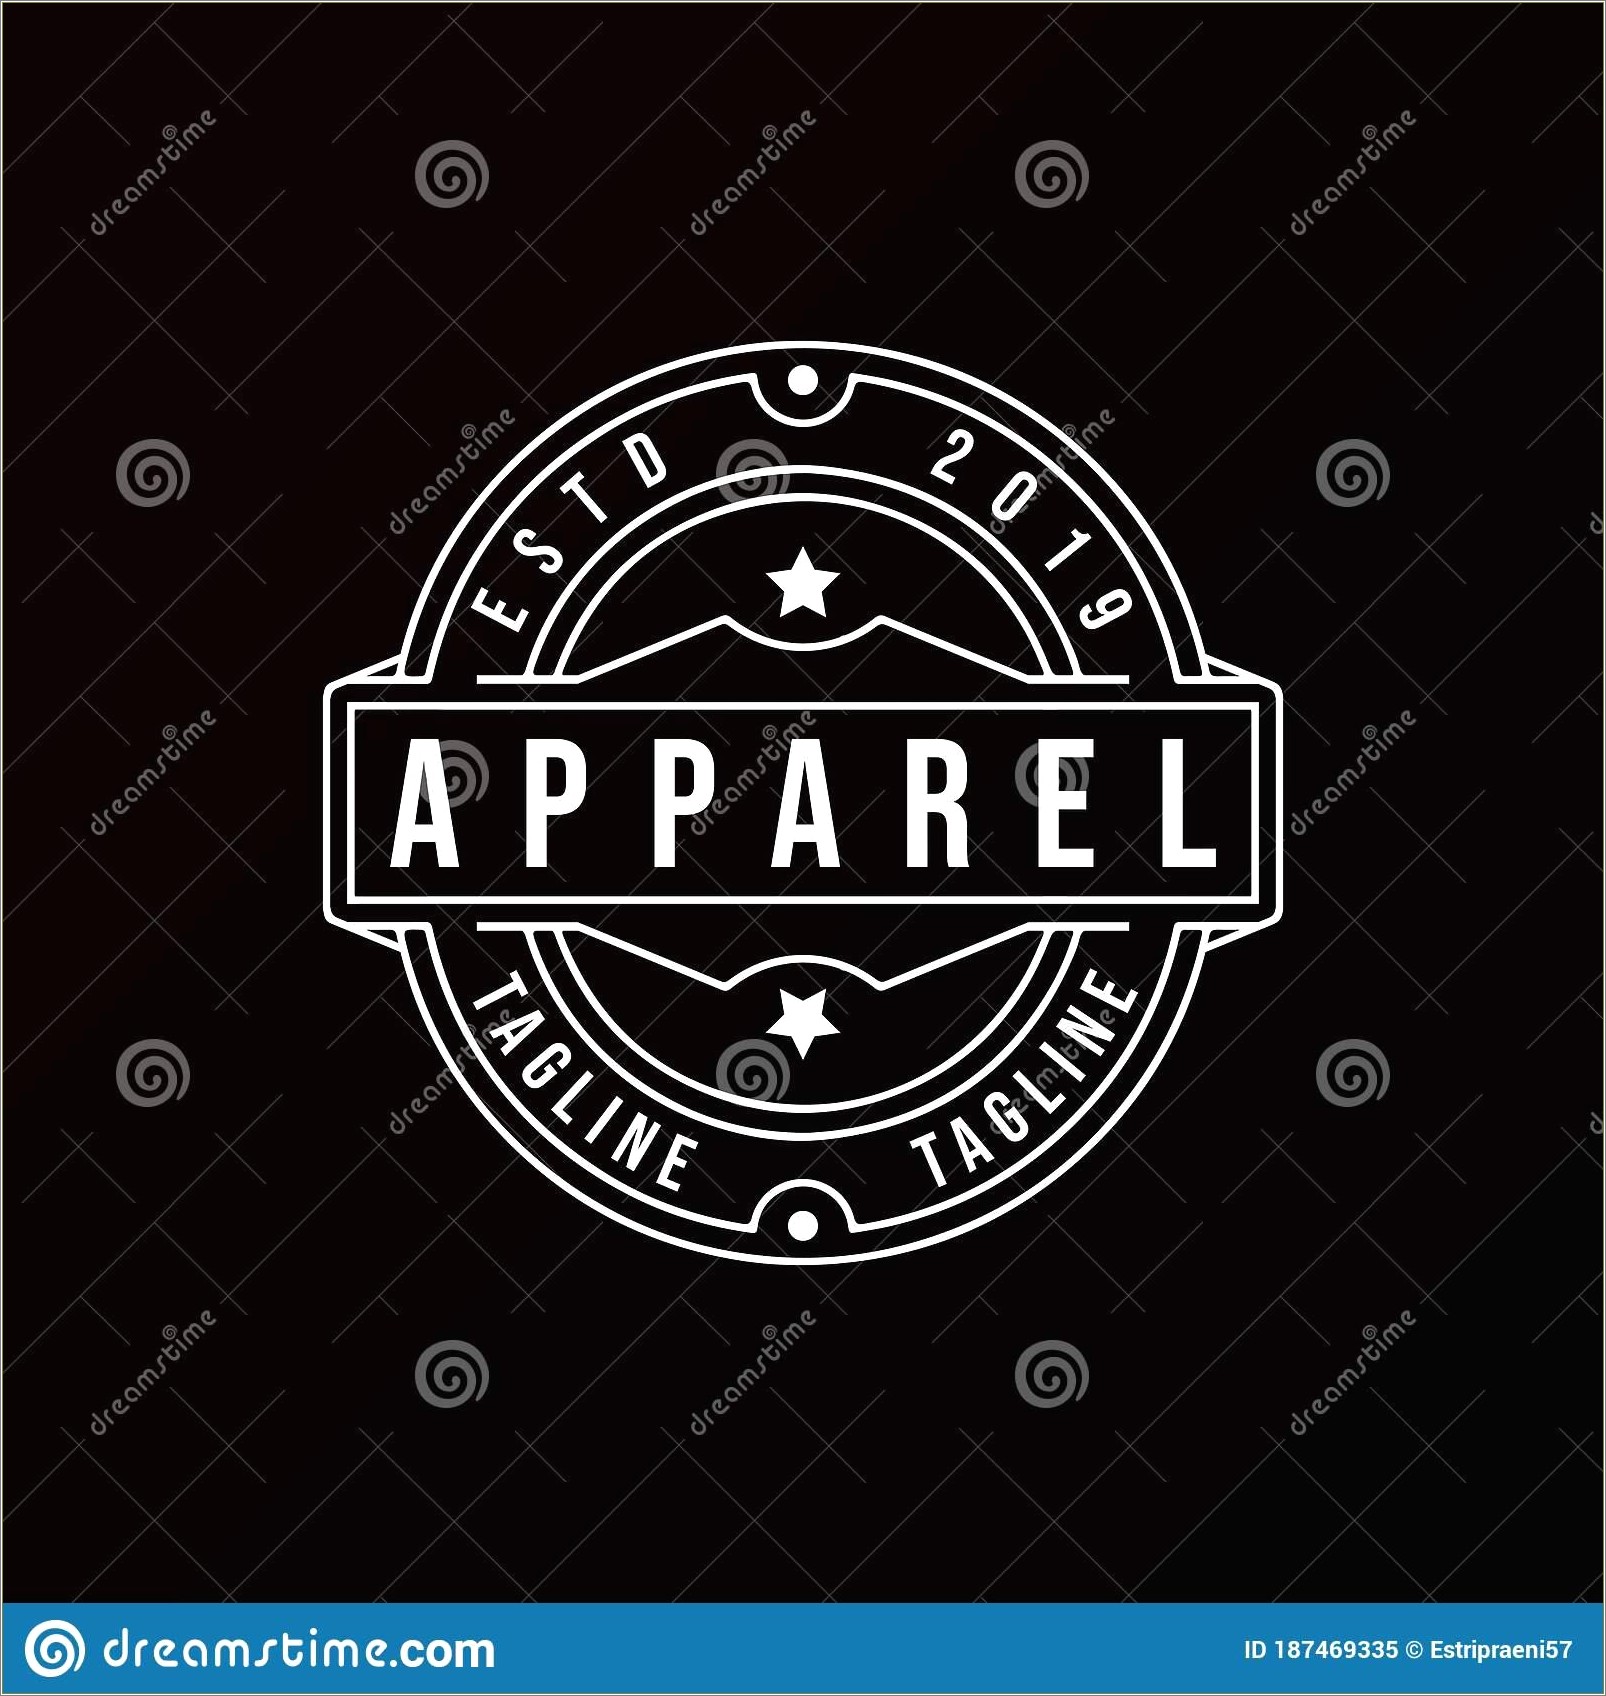 Free Clothing Logo Templates 1900 X 350 Px